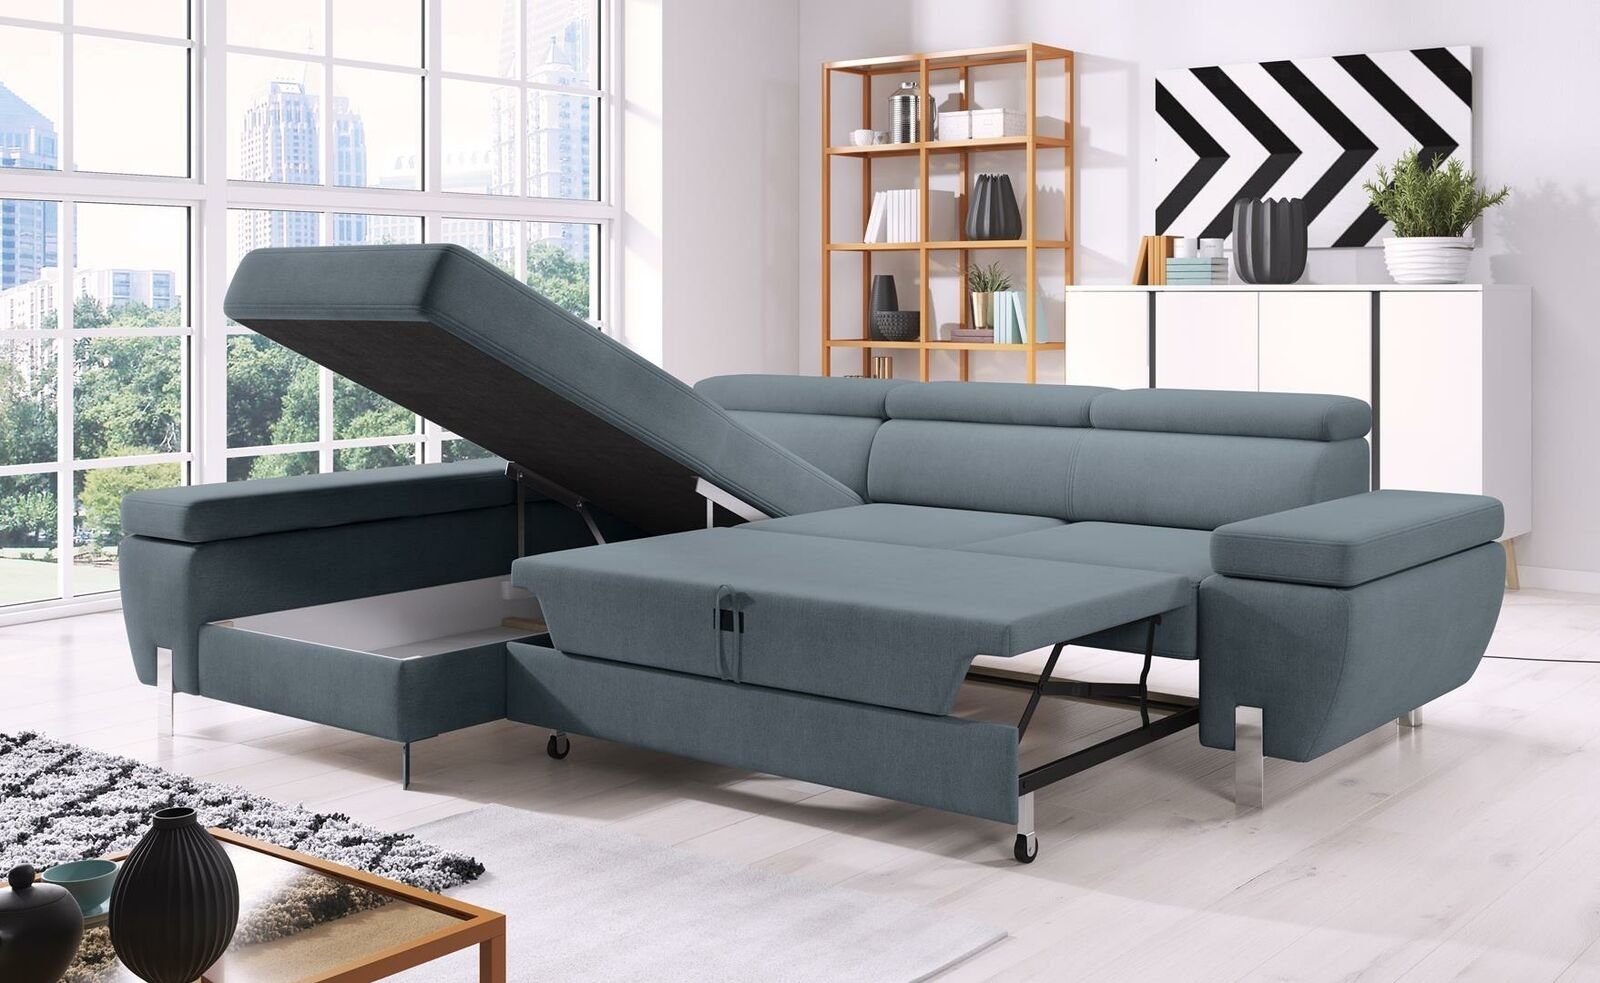 JVmoebel Ecksofa Schlafsofa Mit L-form Couch Bettfunktion Bettfunktion Design Sofas, Textil Dunkelgrau Ecksofa